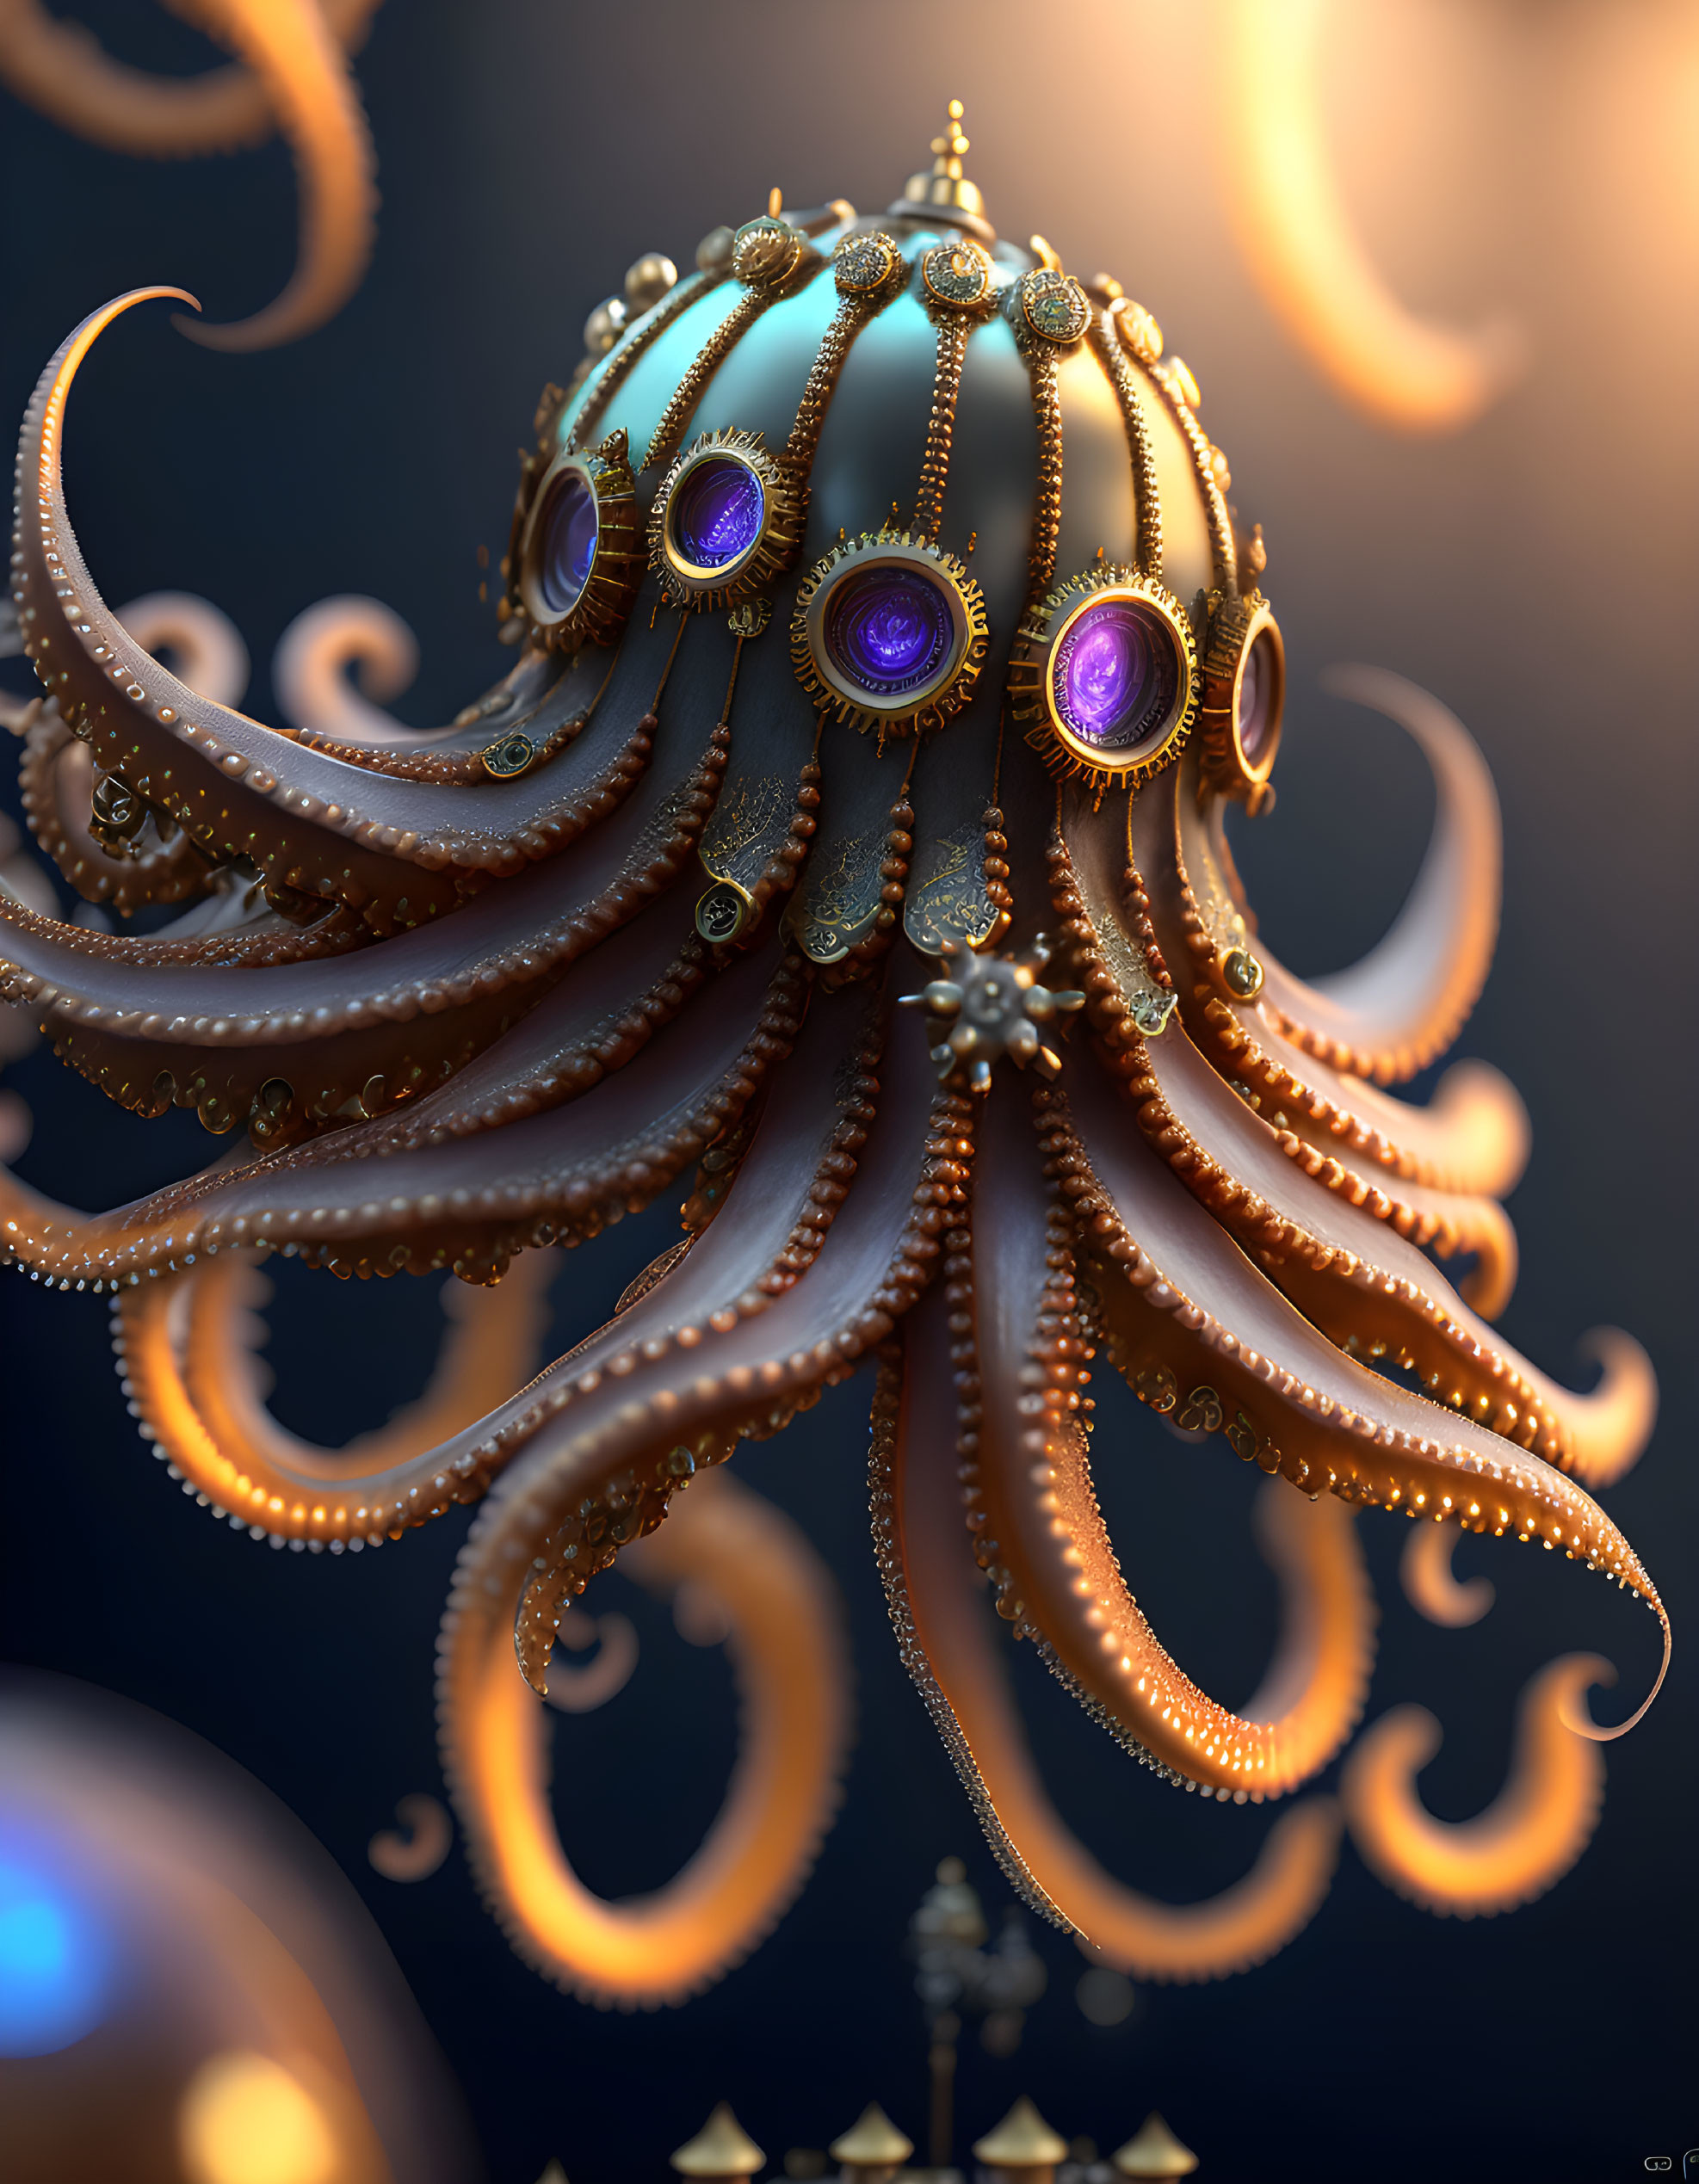 A majestic octopus